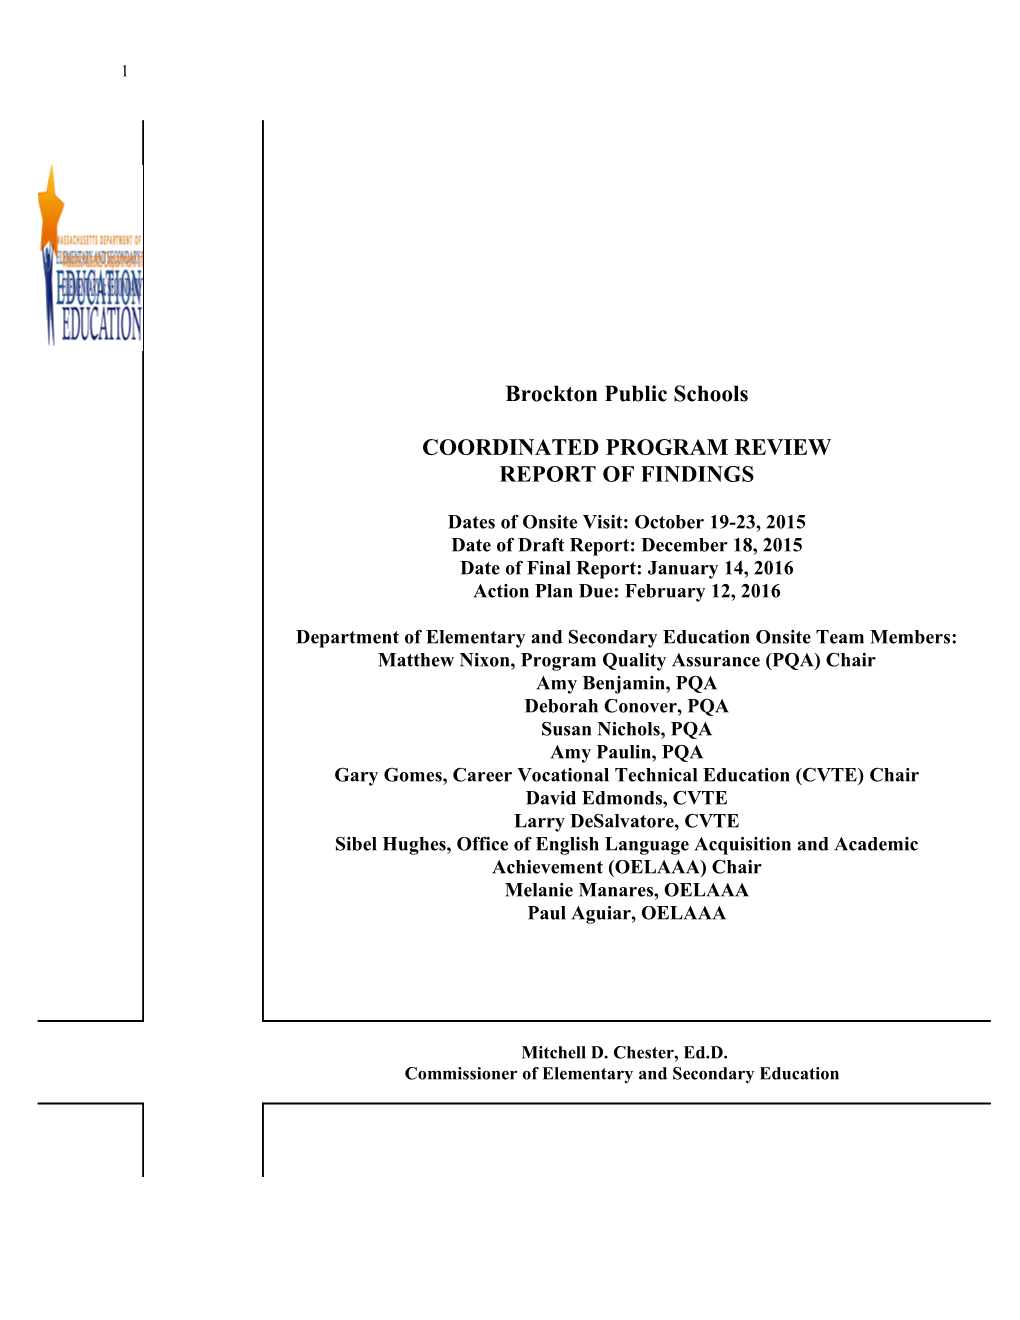 Brockton Public Schools CPR Final Report 2016